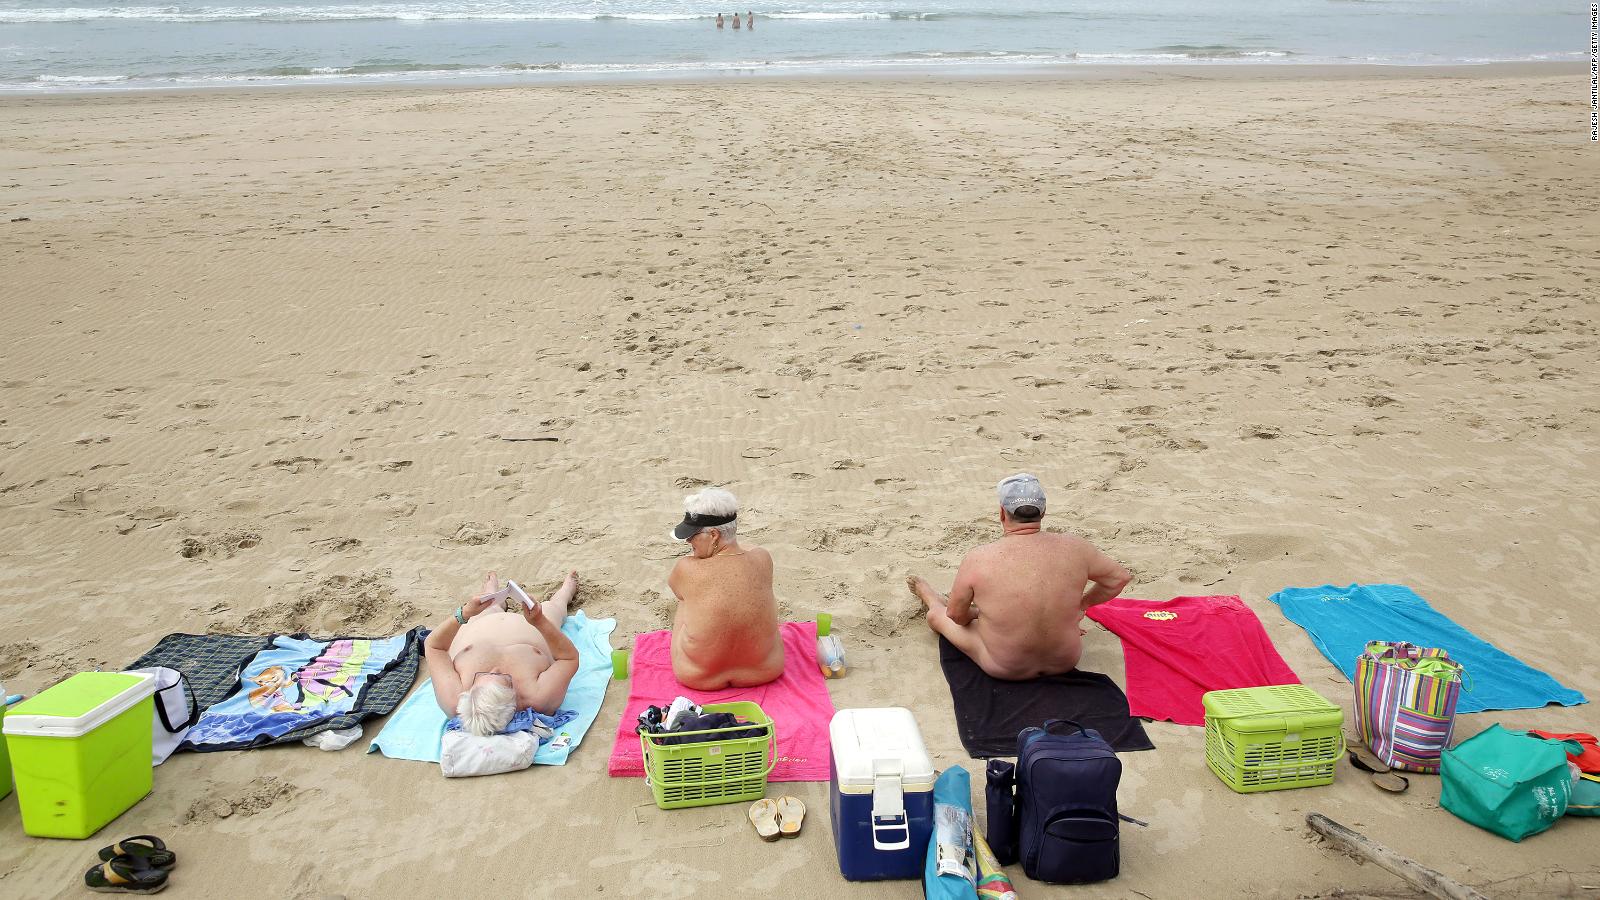 Euro Topless Beach Videos - 15 best nude beaches around the world | CNN Travel